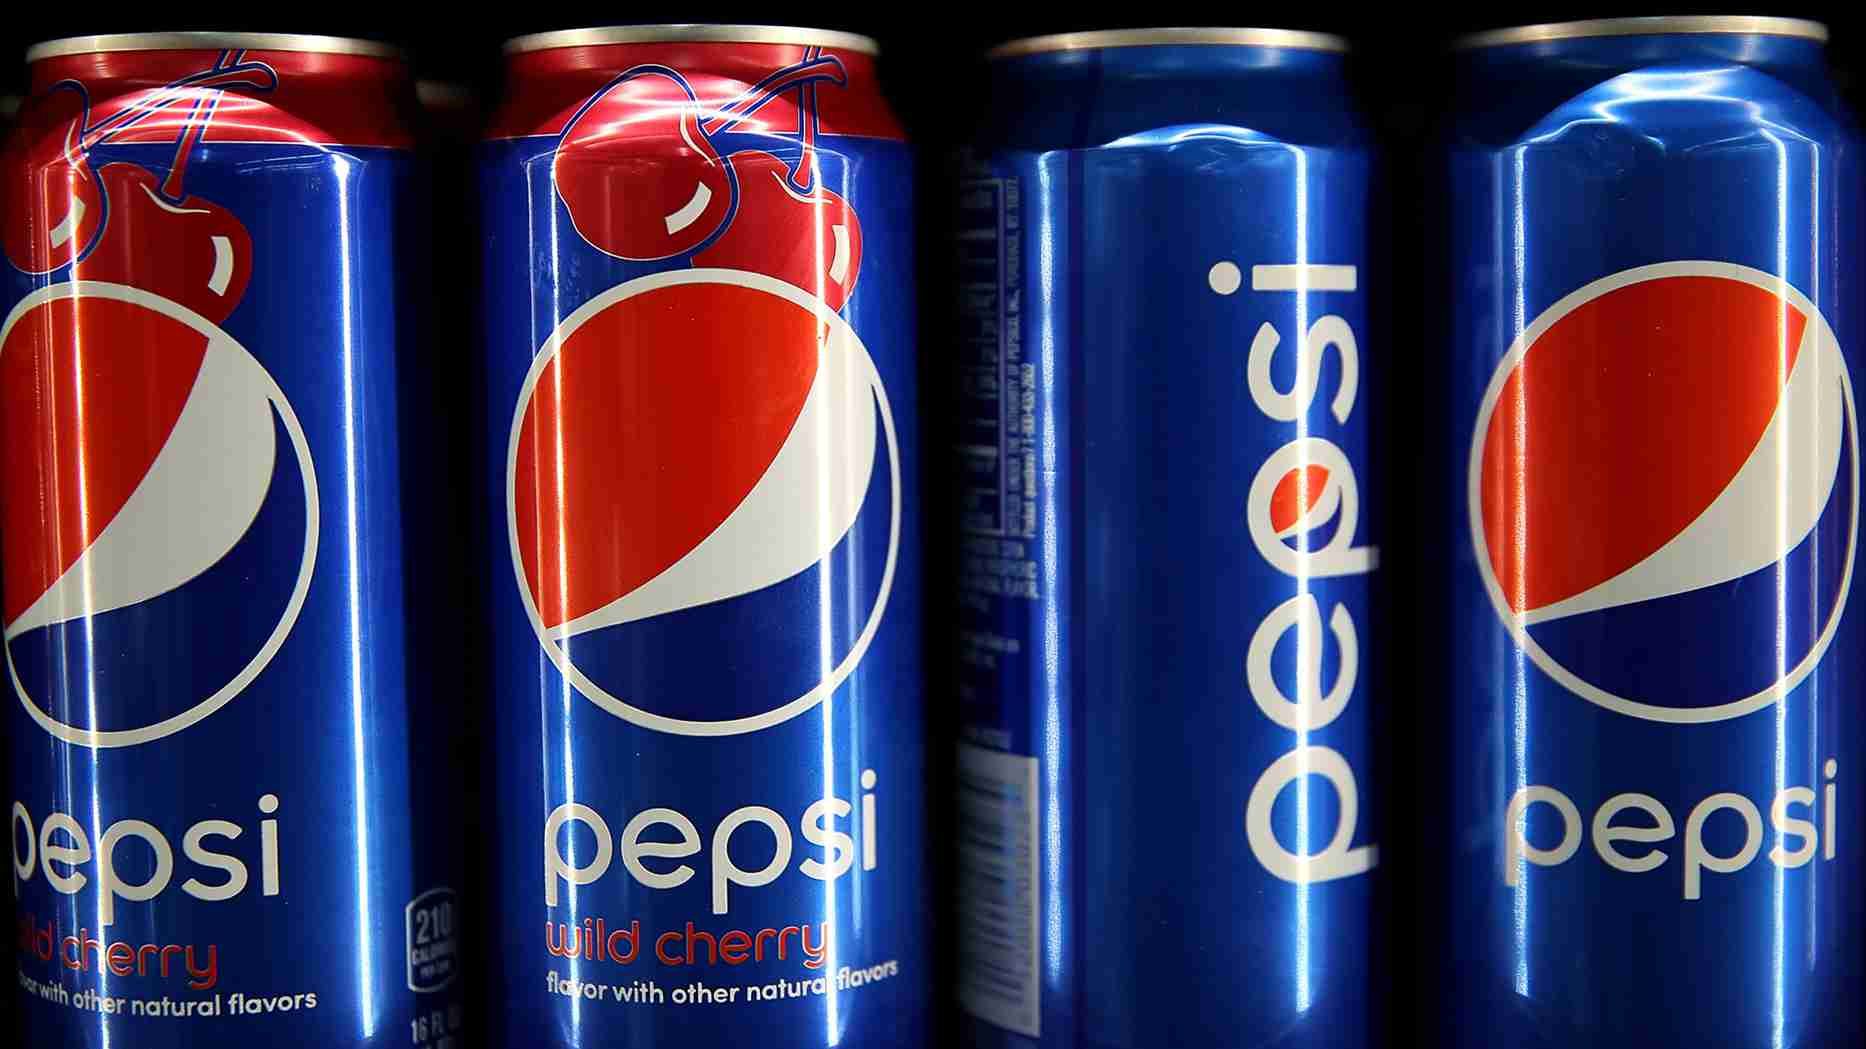 PepsiCo puts fizz into healthy drinks with $3.2 billion SodaStream deal ...